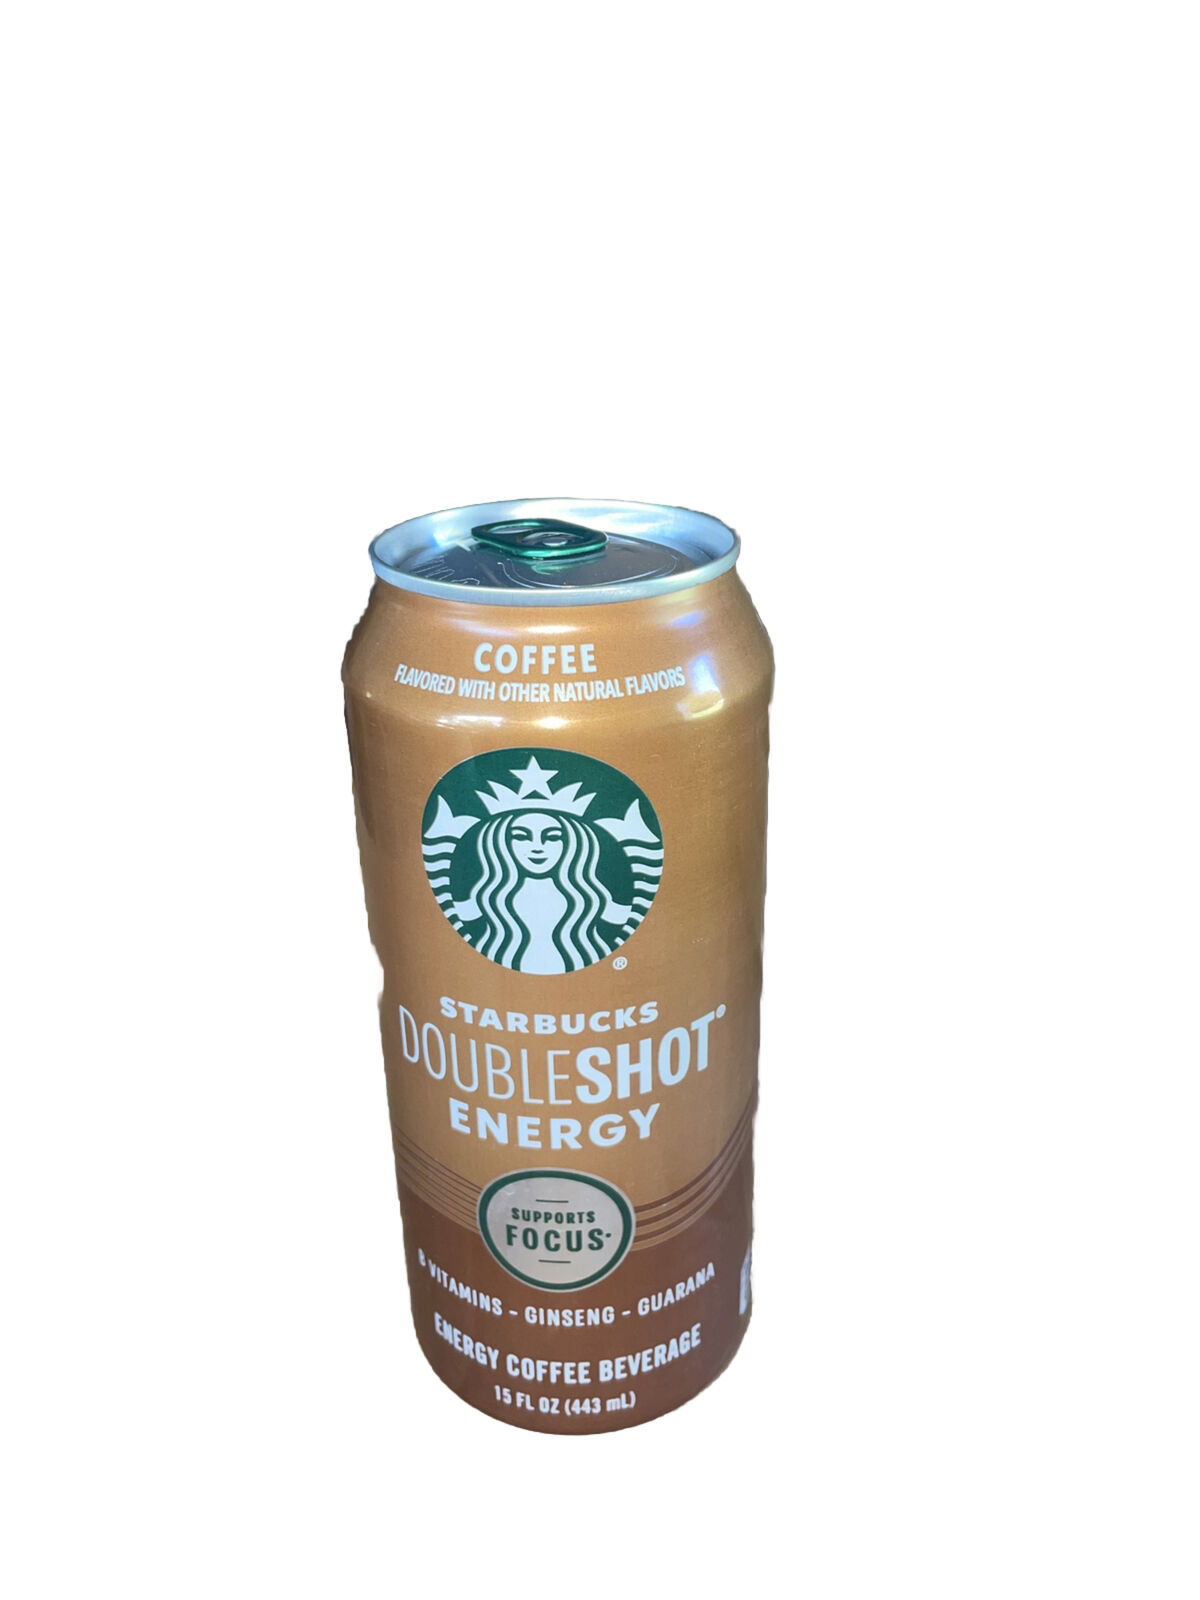 Starbucks Doubleshot Energy Drink Coffee Beverage - 15 oz (Pack of 12)